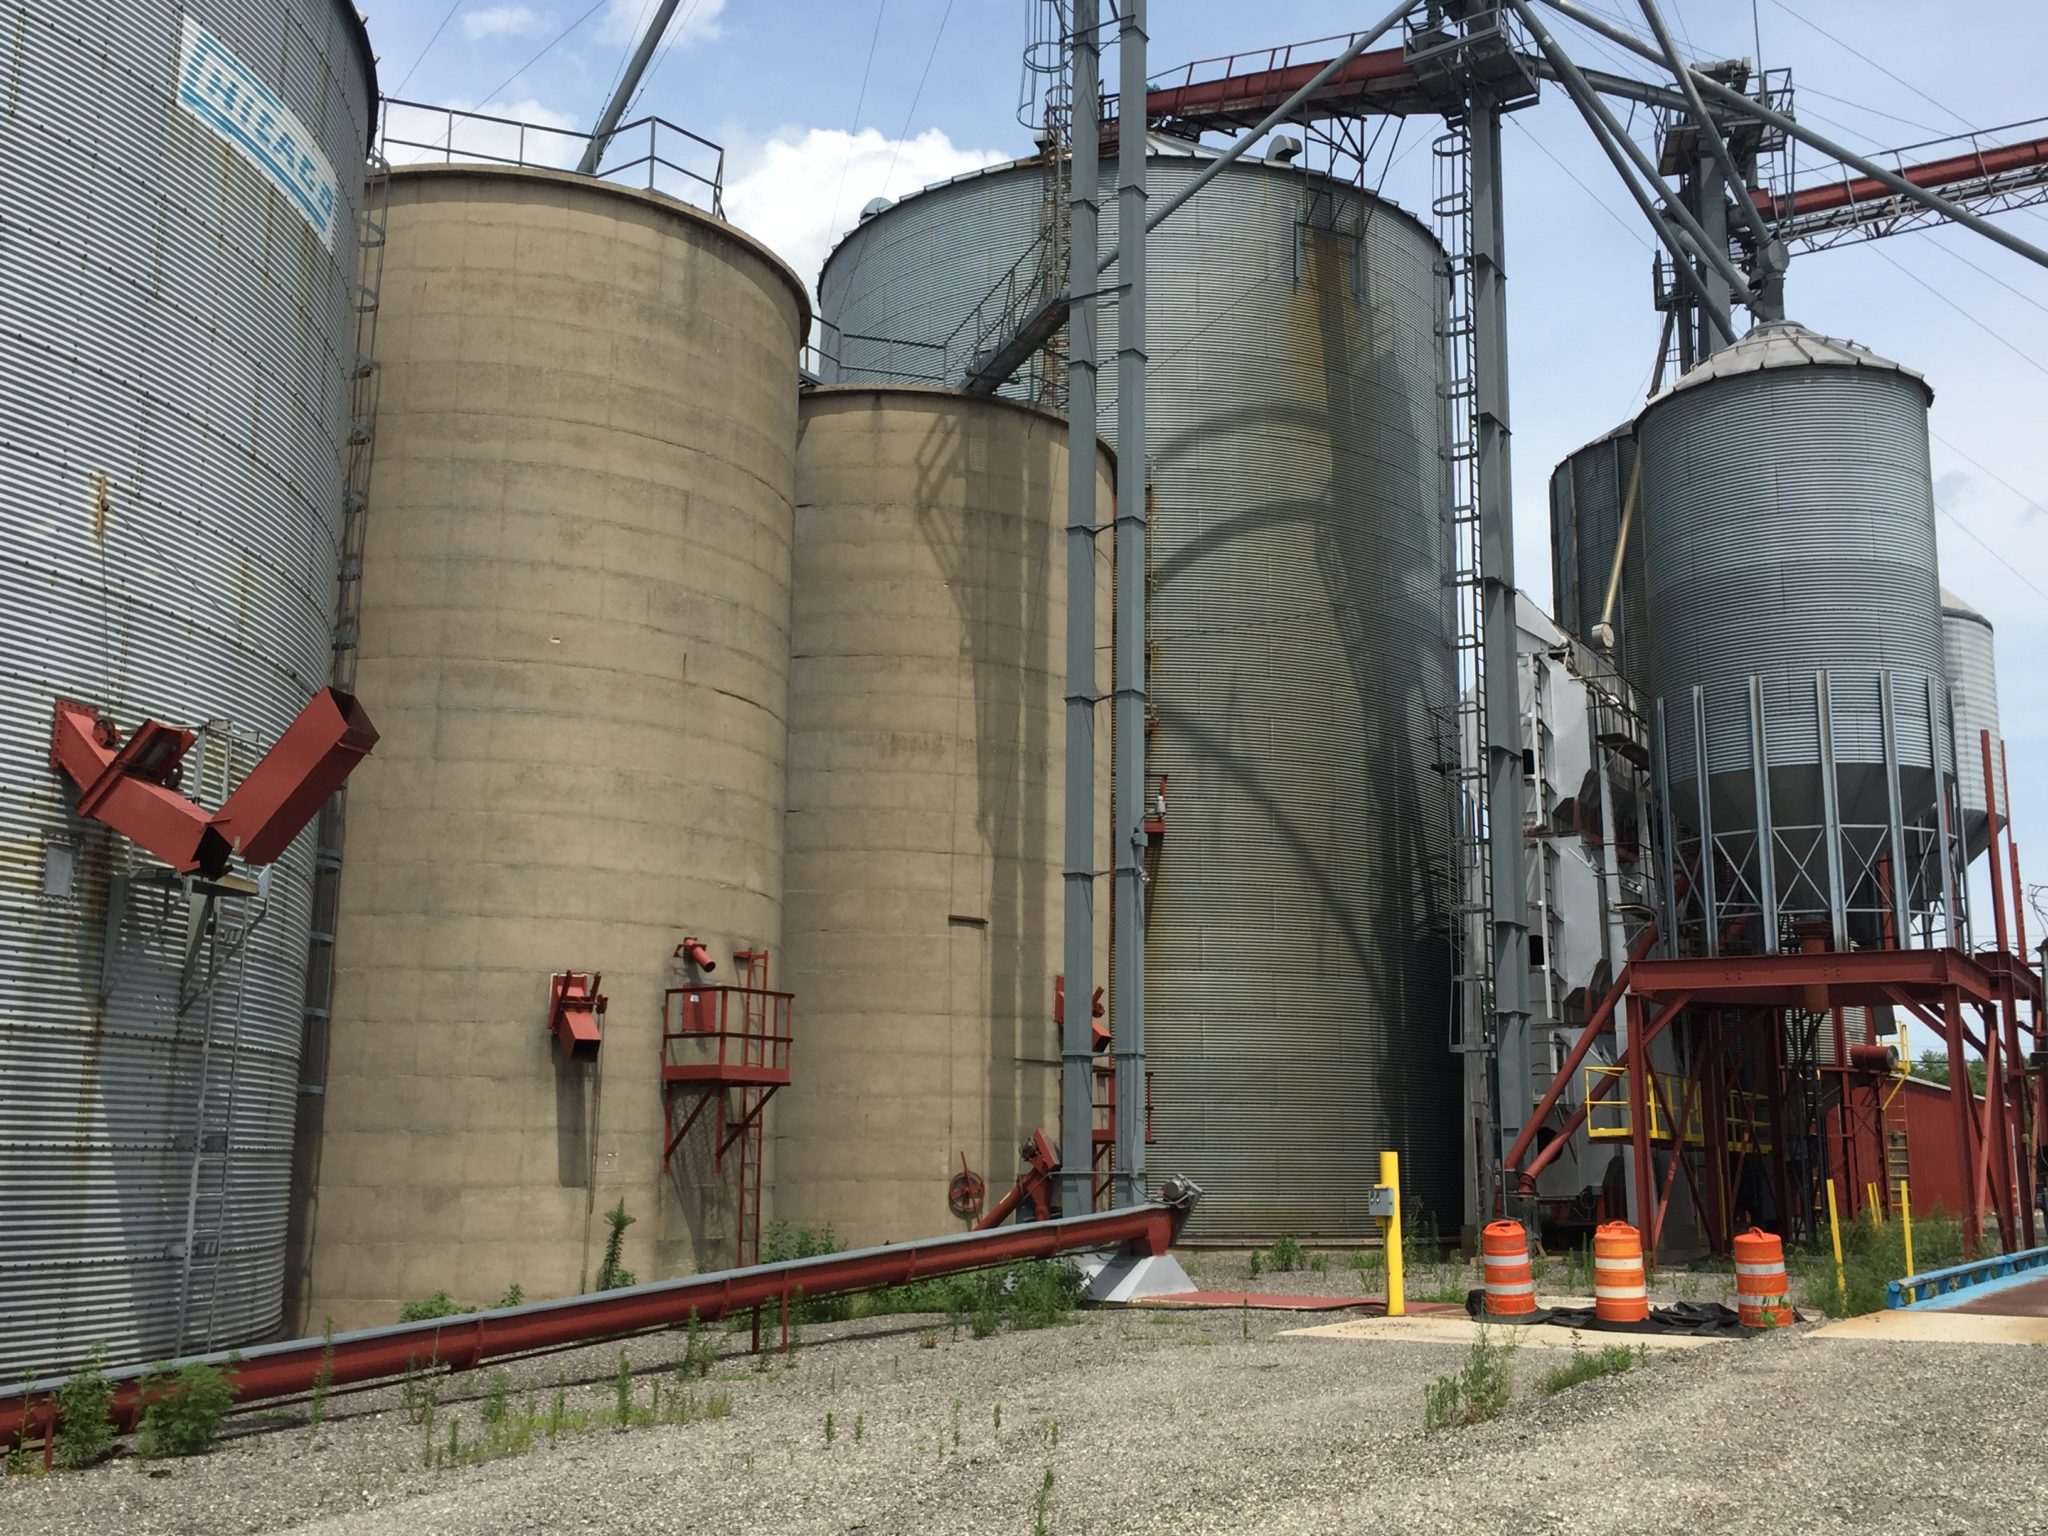 Dekalb County, Cortland Grain Facility